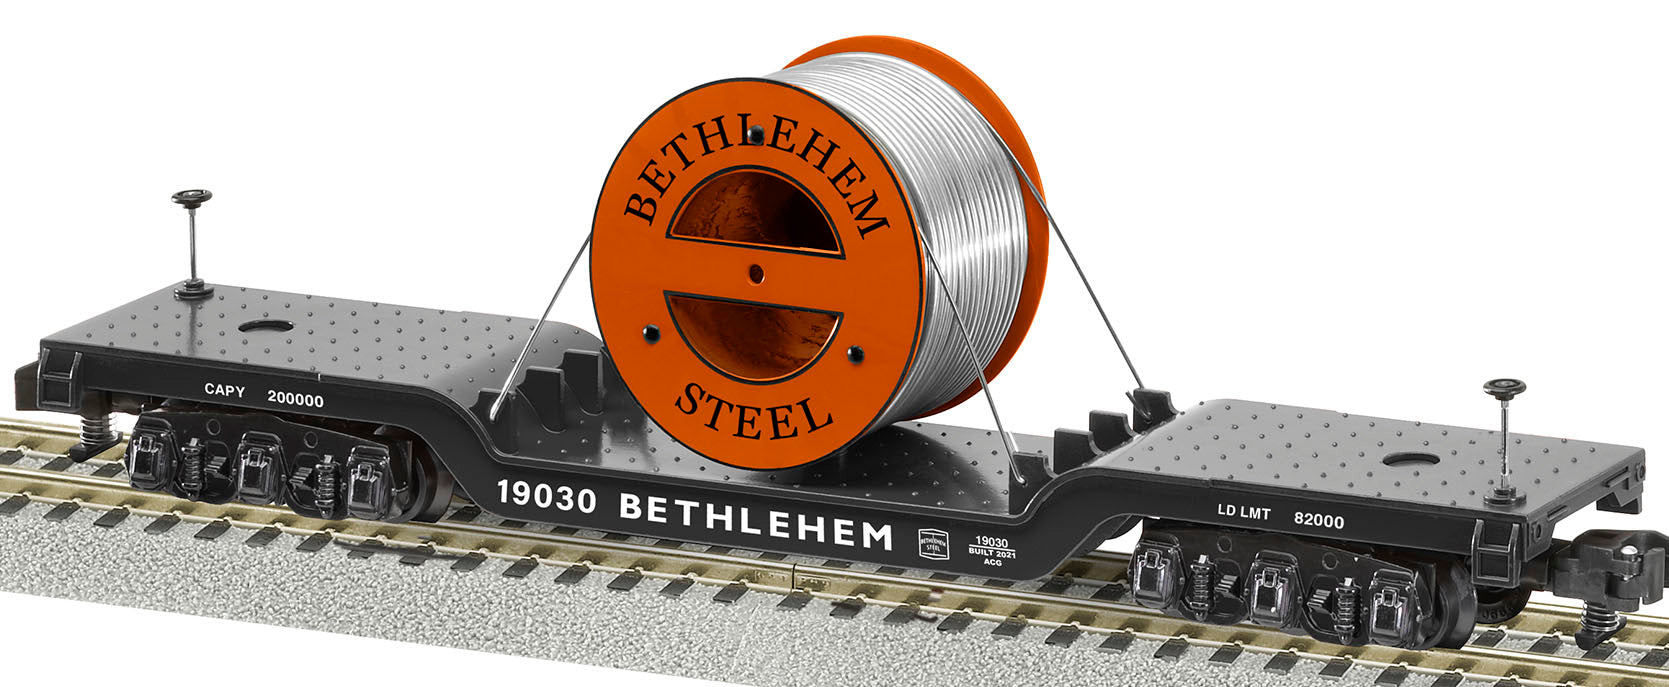 Lionel A/F 2119030 - Depressed Center Flatcar "Bethlehem Steel" w/ Cable